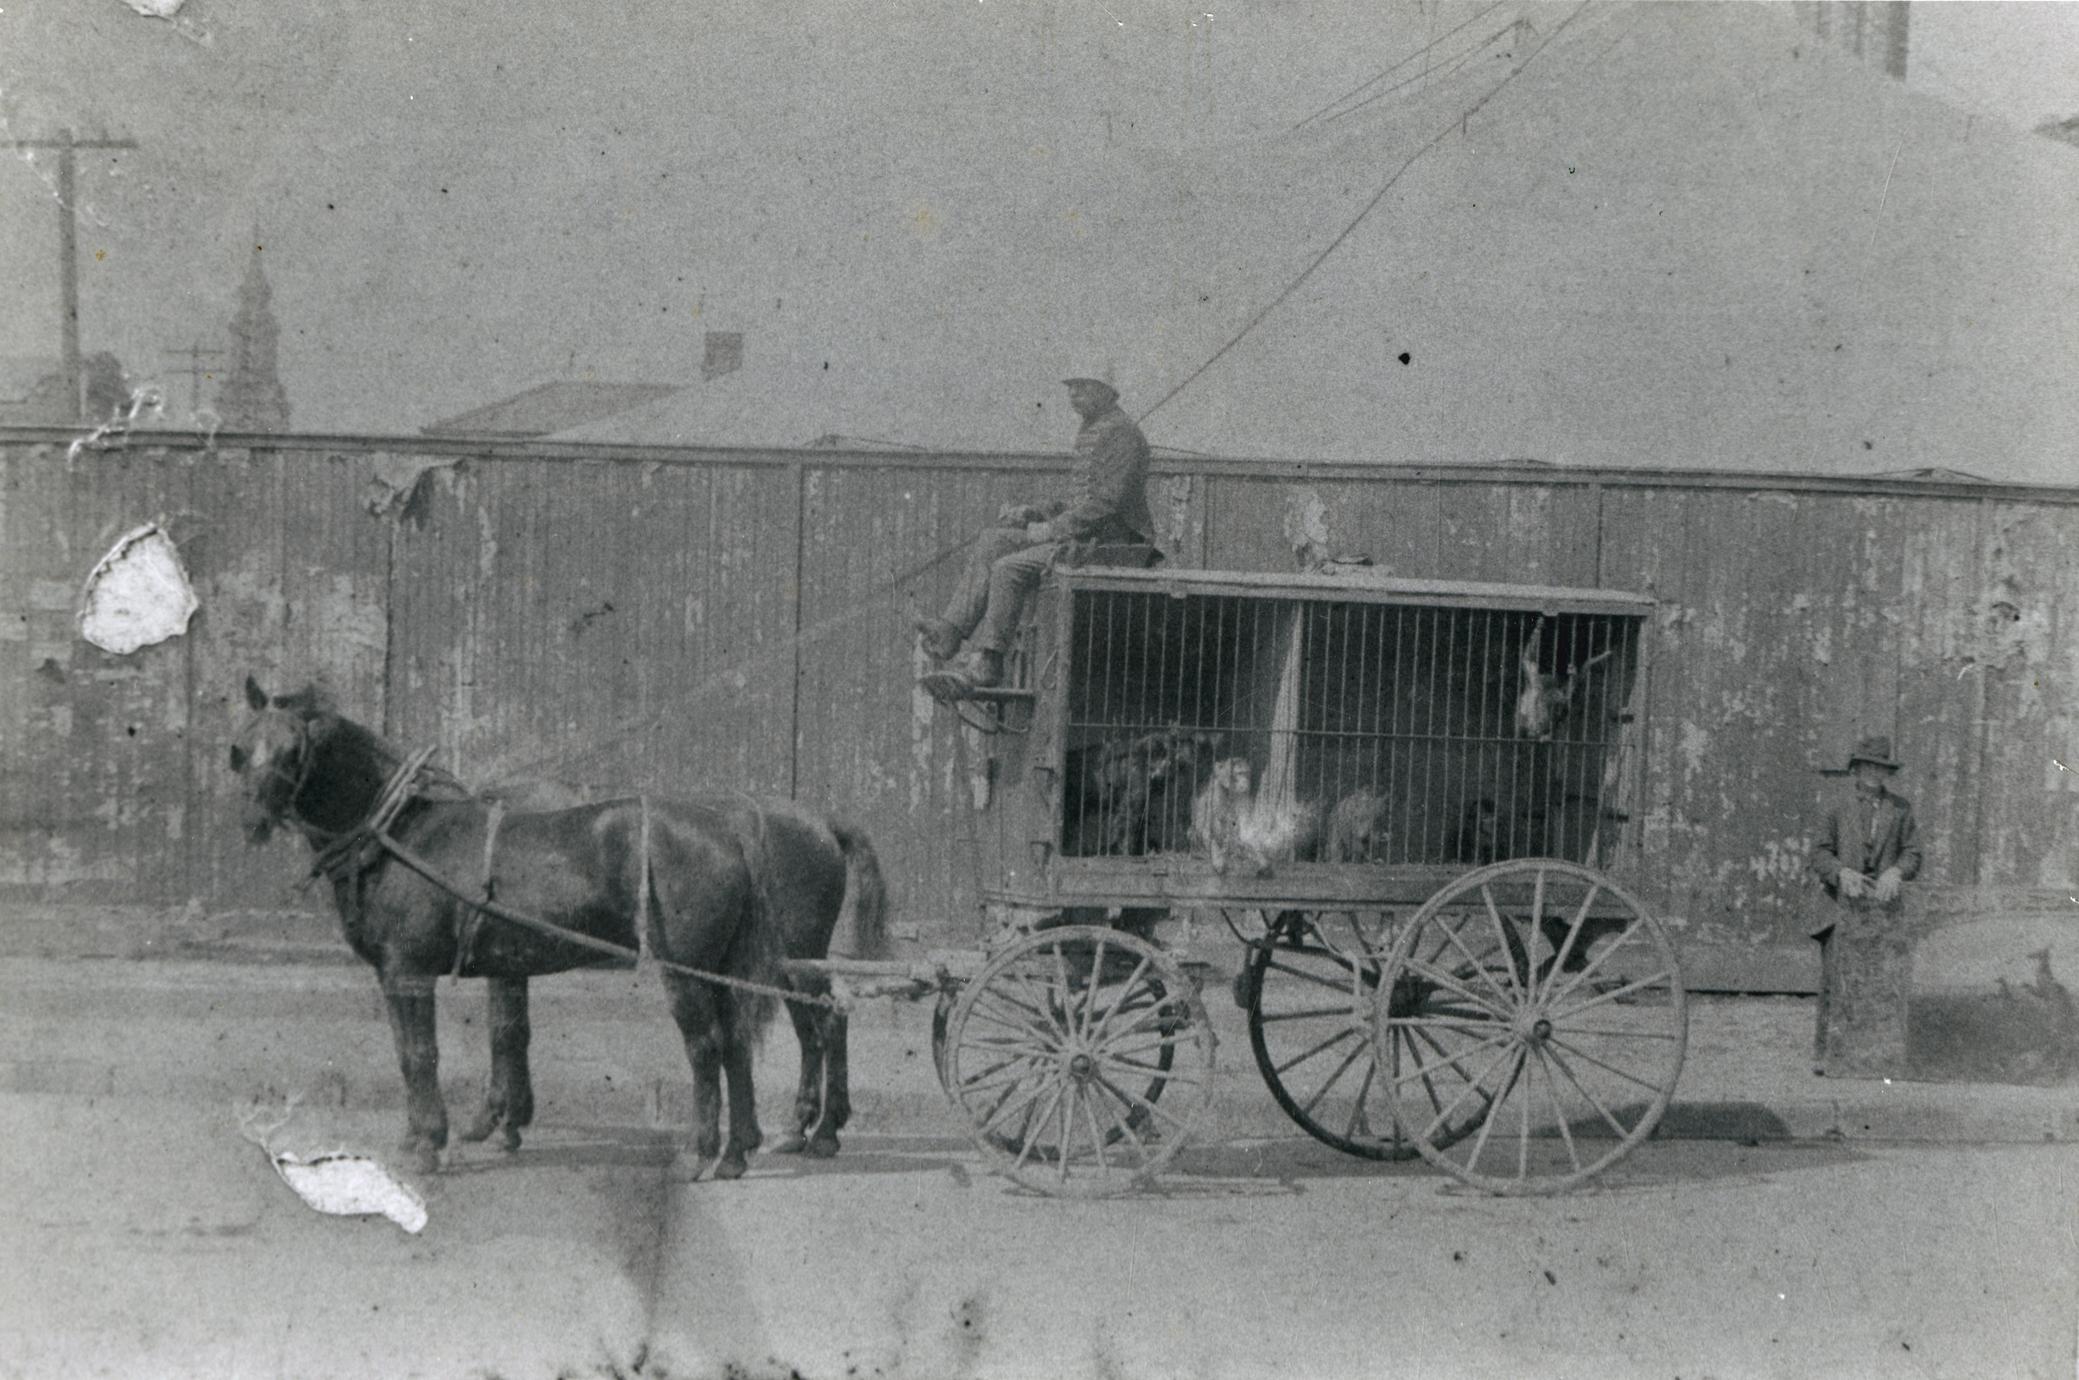 Circus monkey wagon drawn by a horse